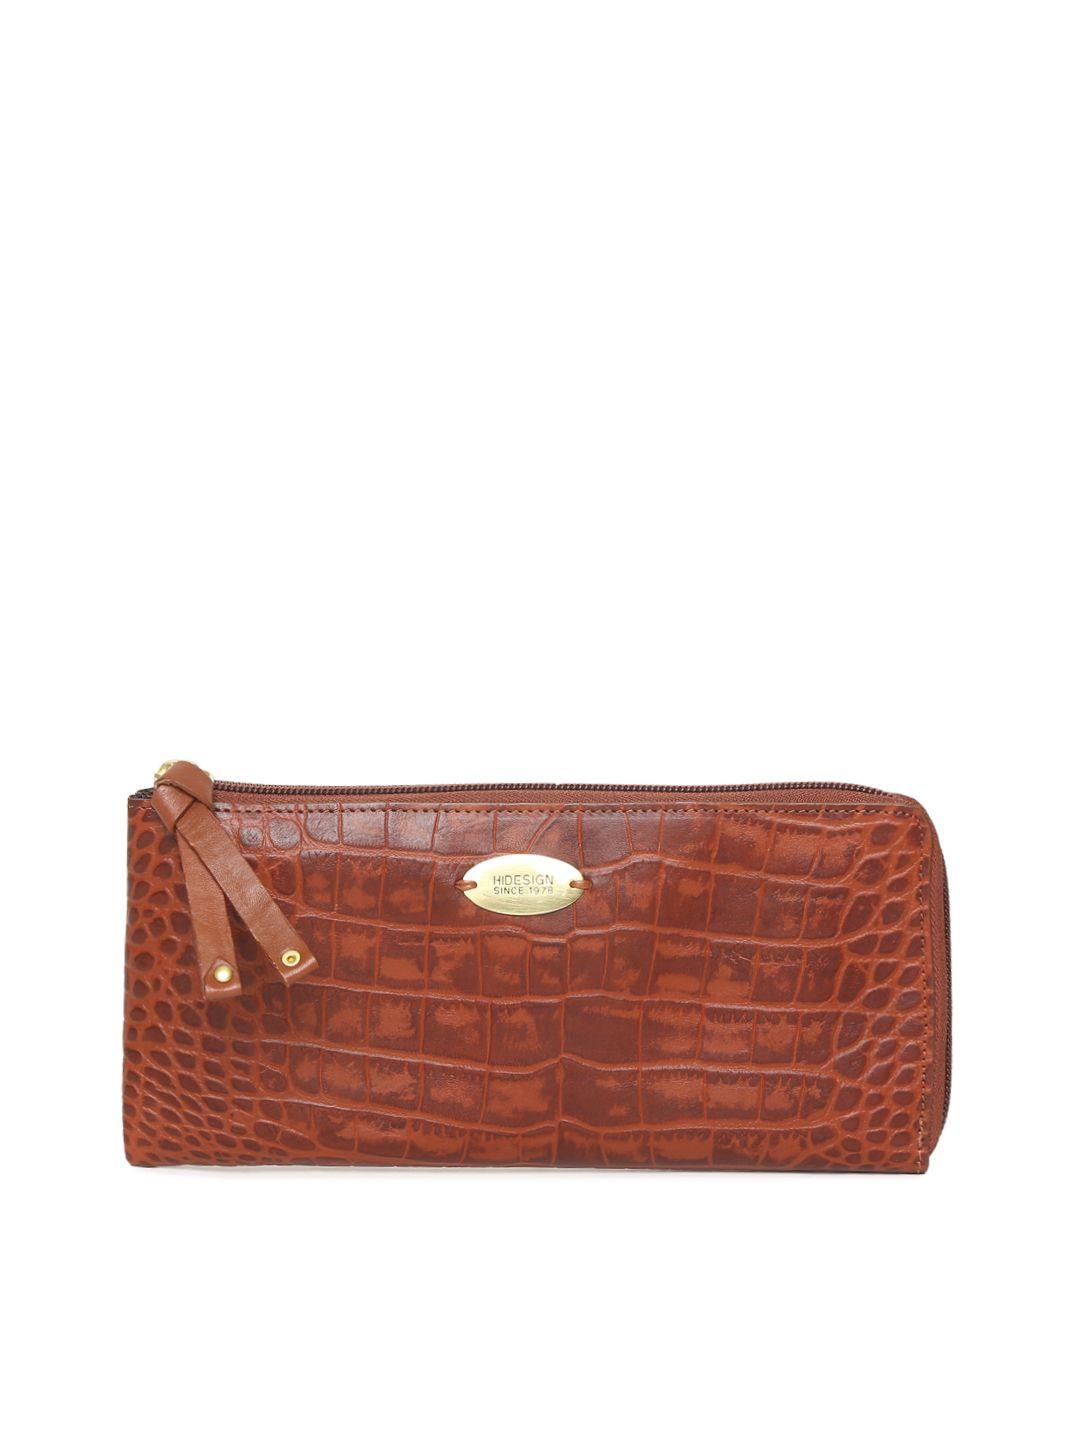 hidesign tan brown textured zip around wallet